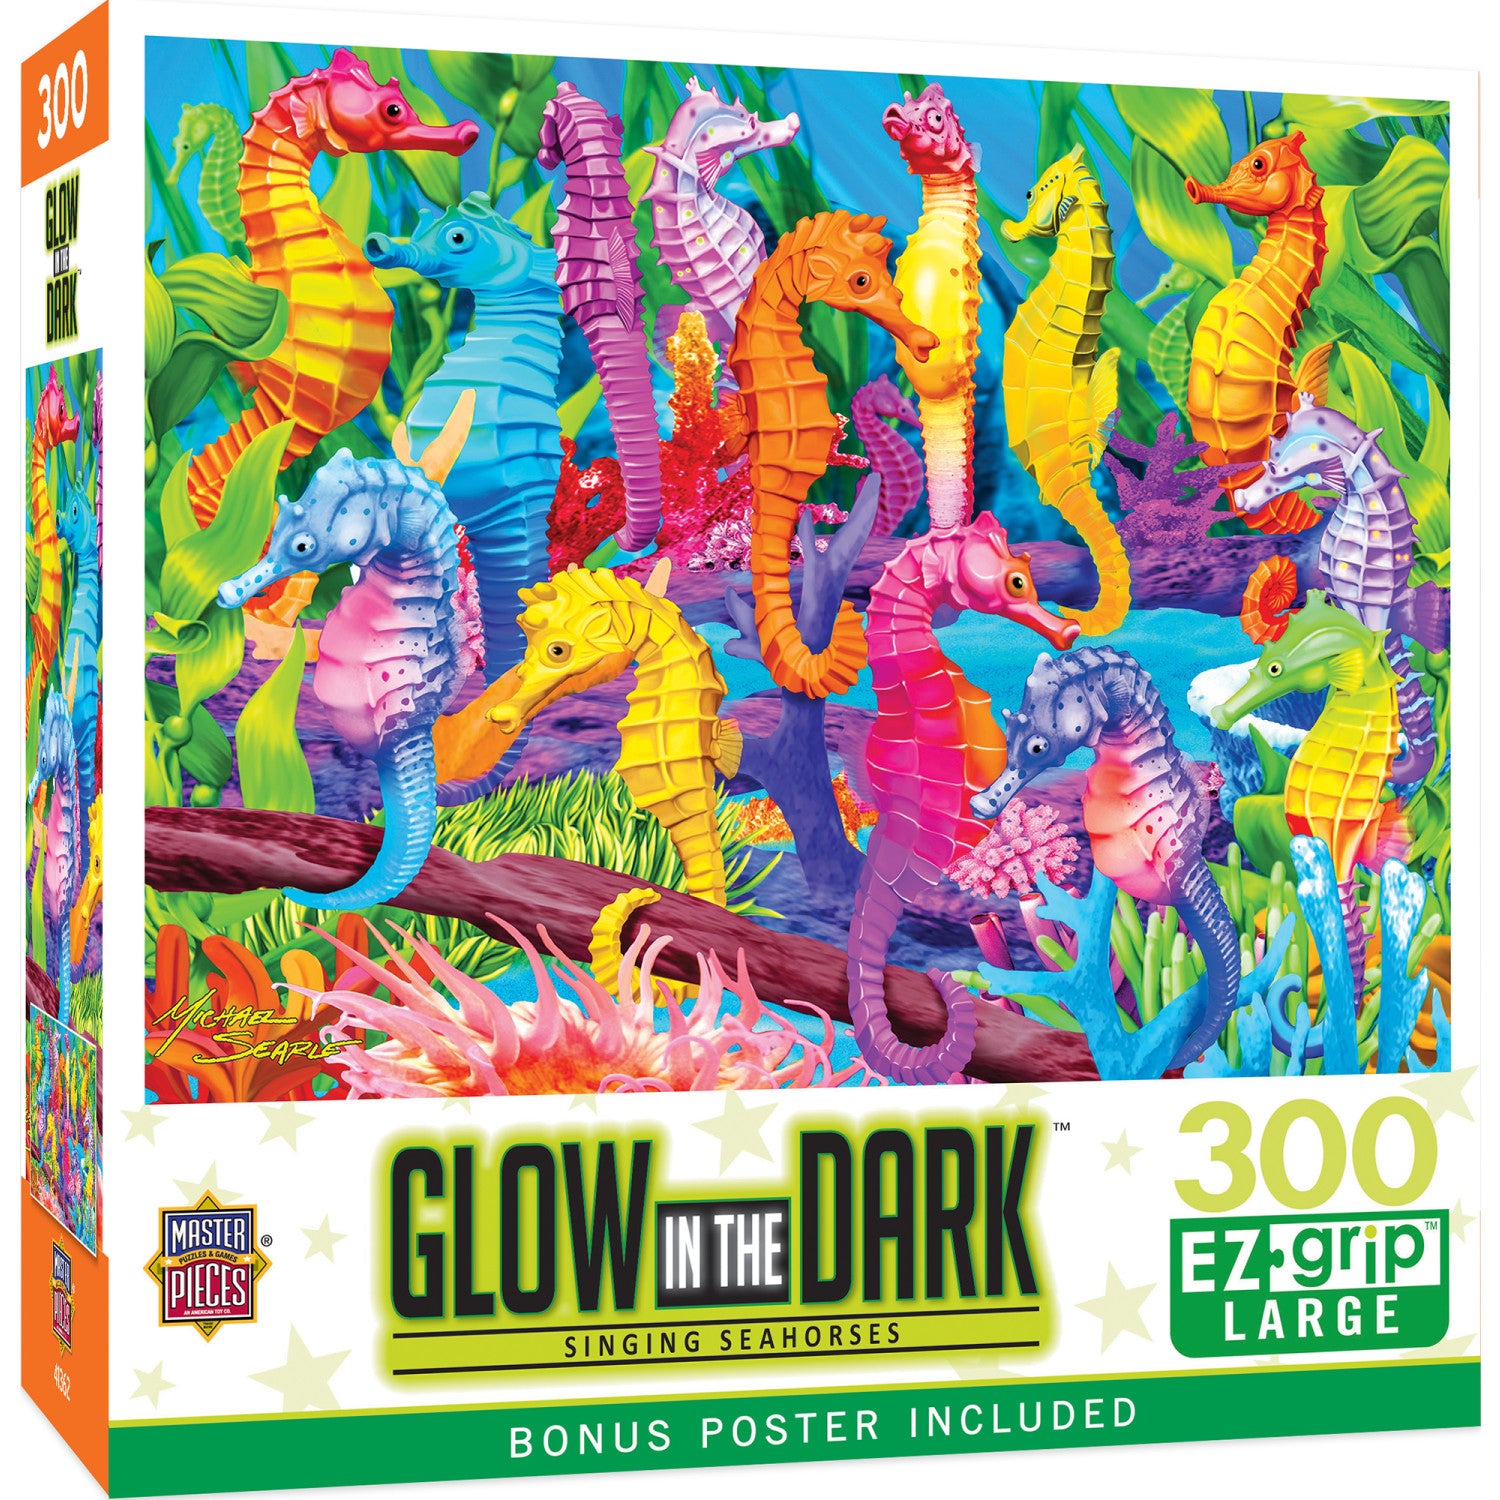 Glow in the Dark - Singing Seahorses 300 Piece EZ Grip Jigsaw Puzzle